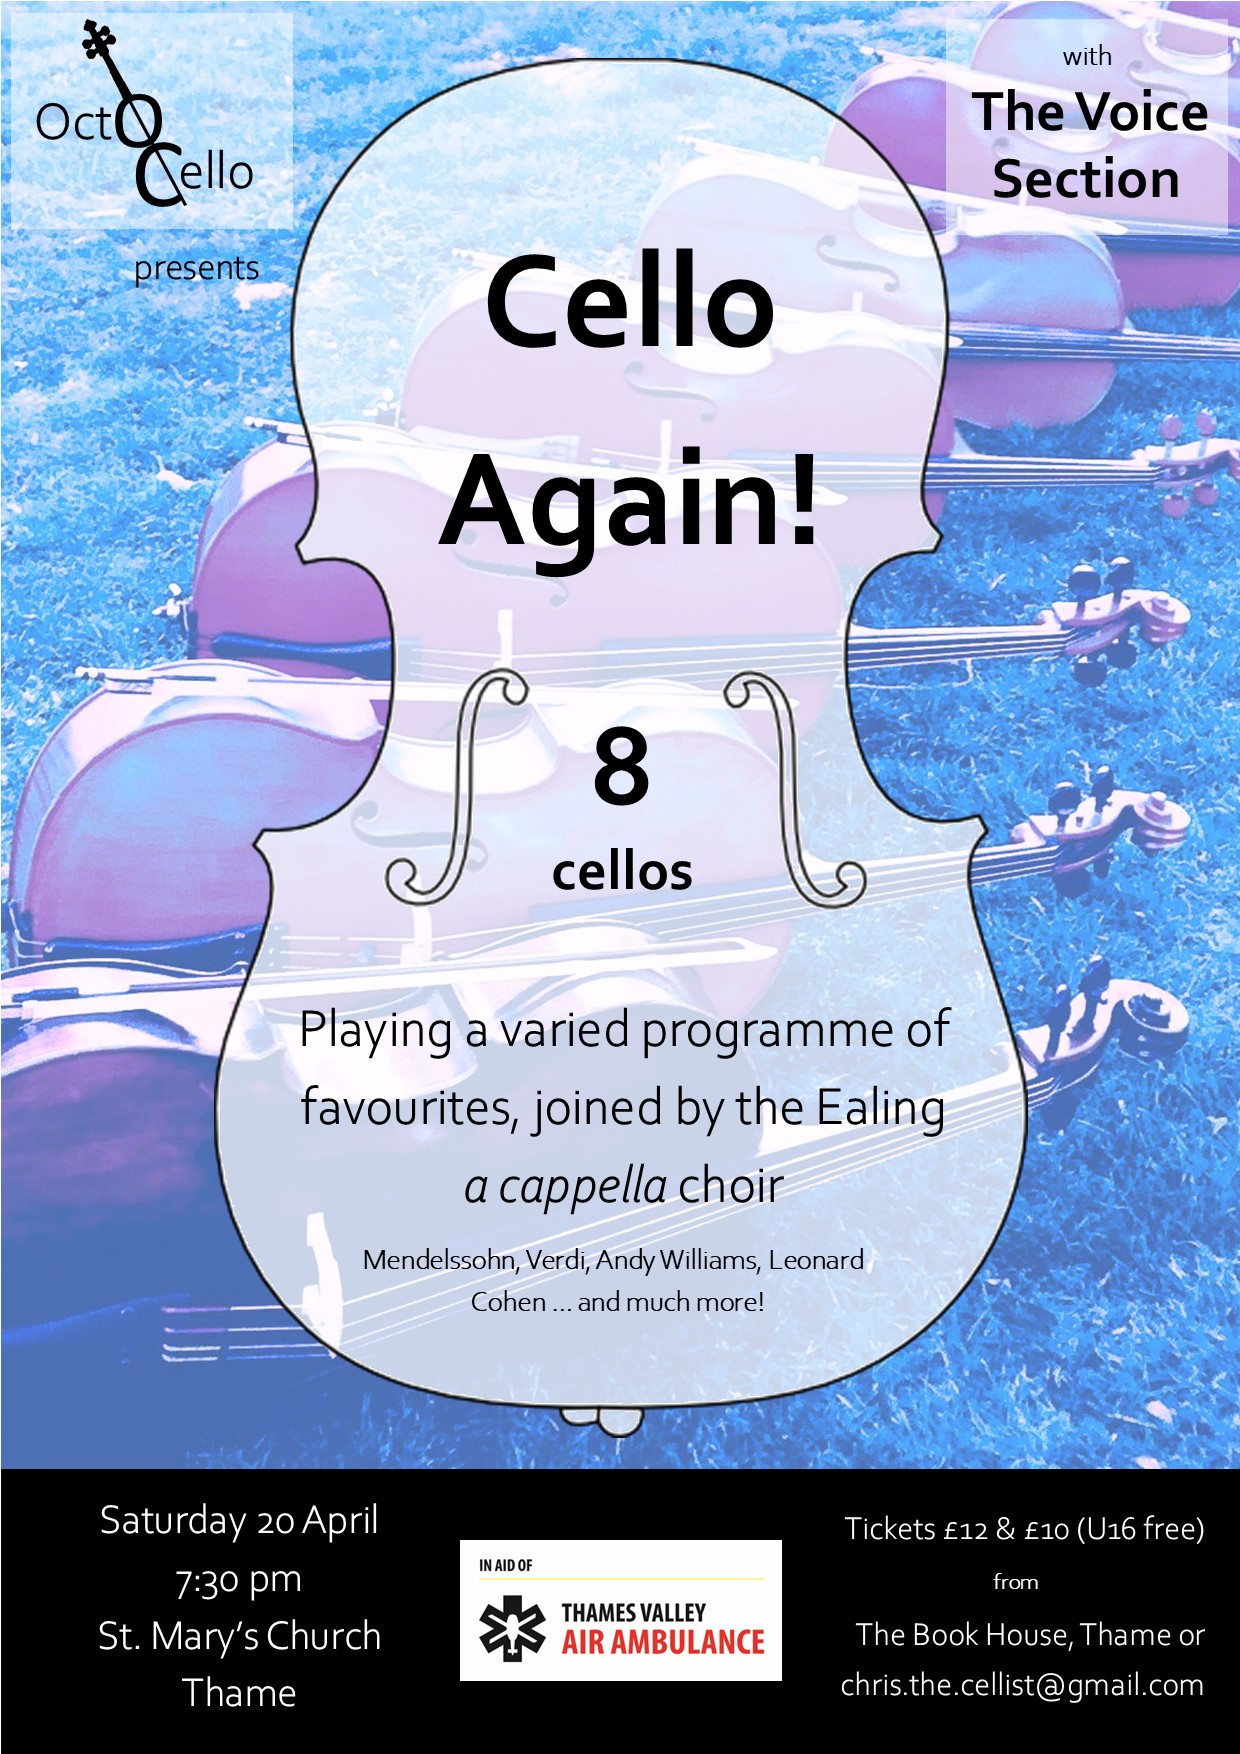 Cello Again! - a concert featuring the unique sound of multiple cellos